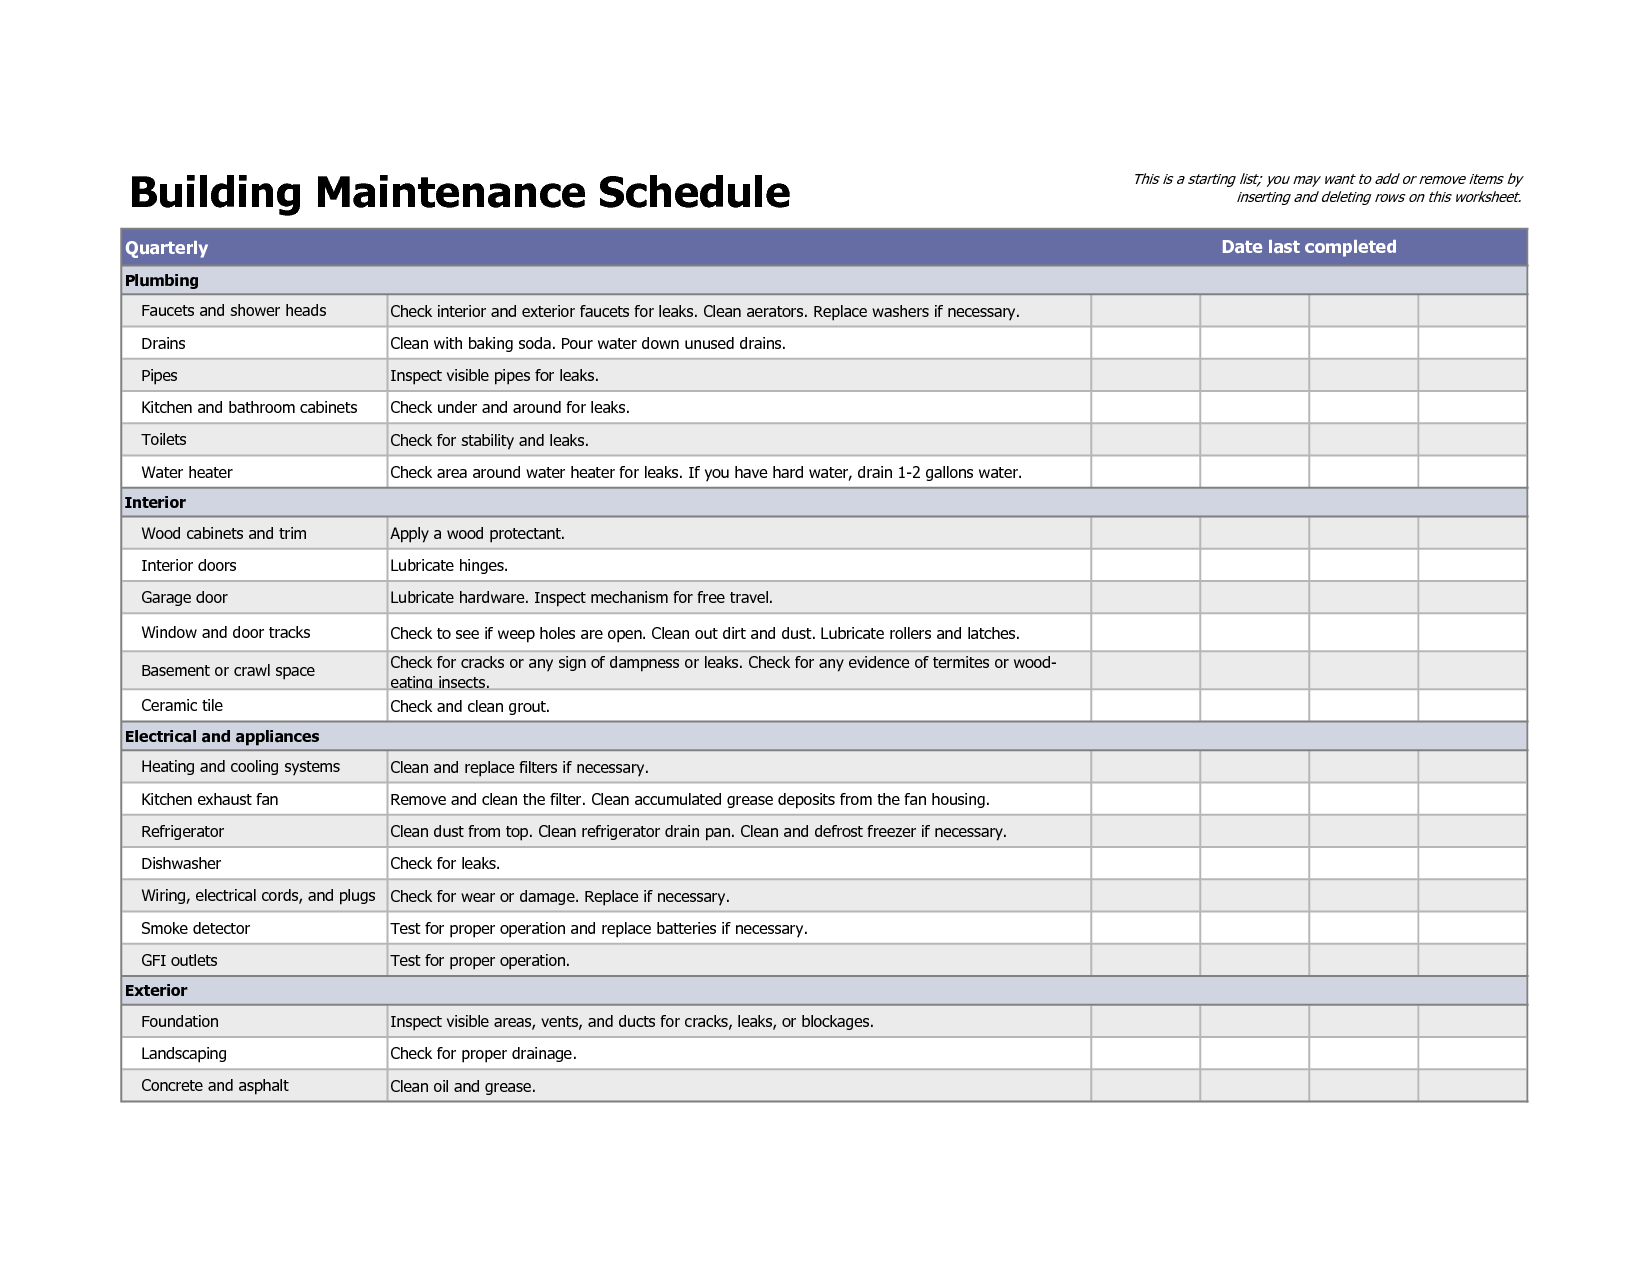 Building Maintenance Schedule Excel Template